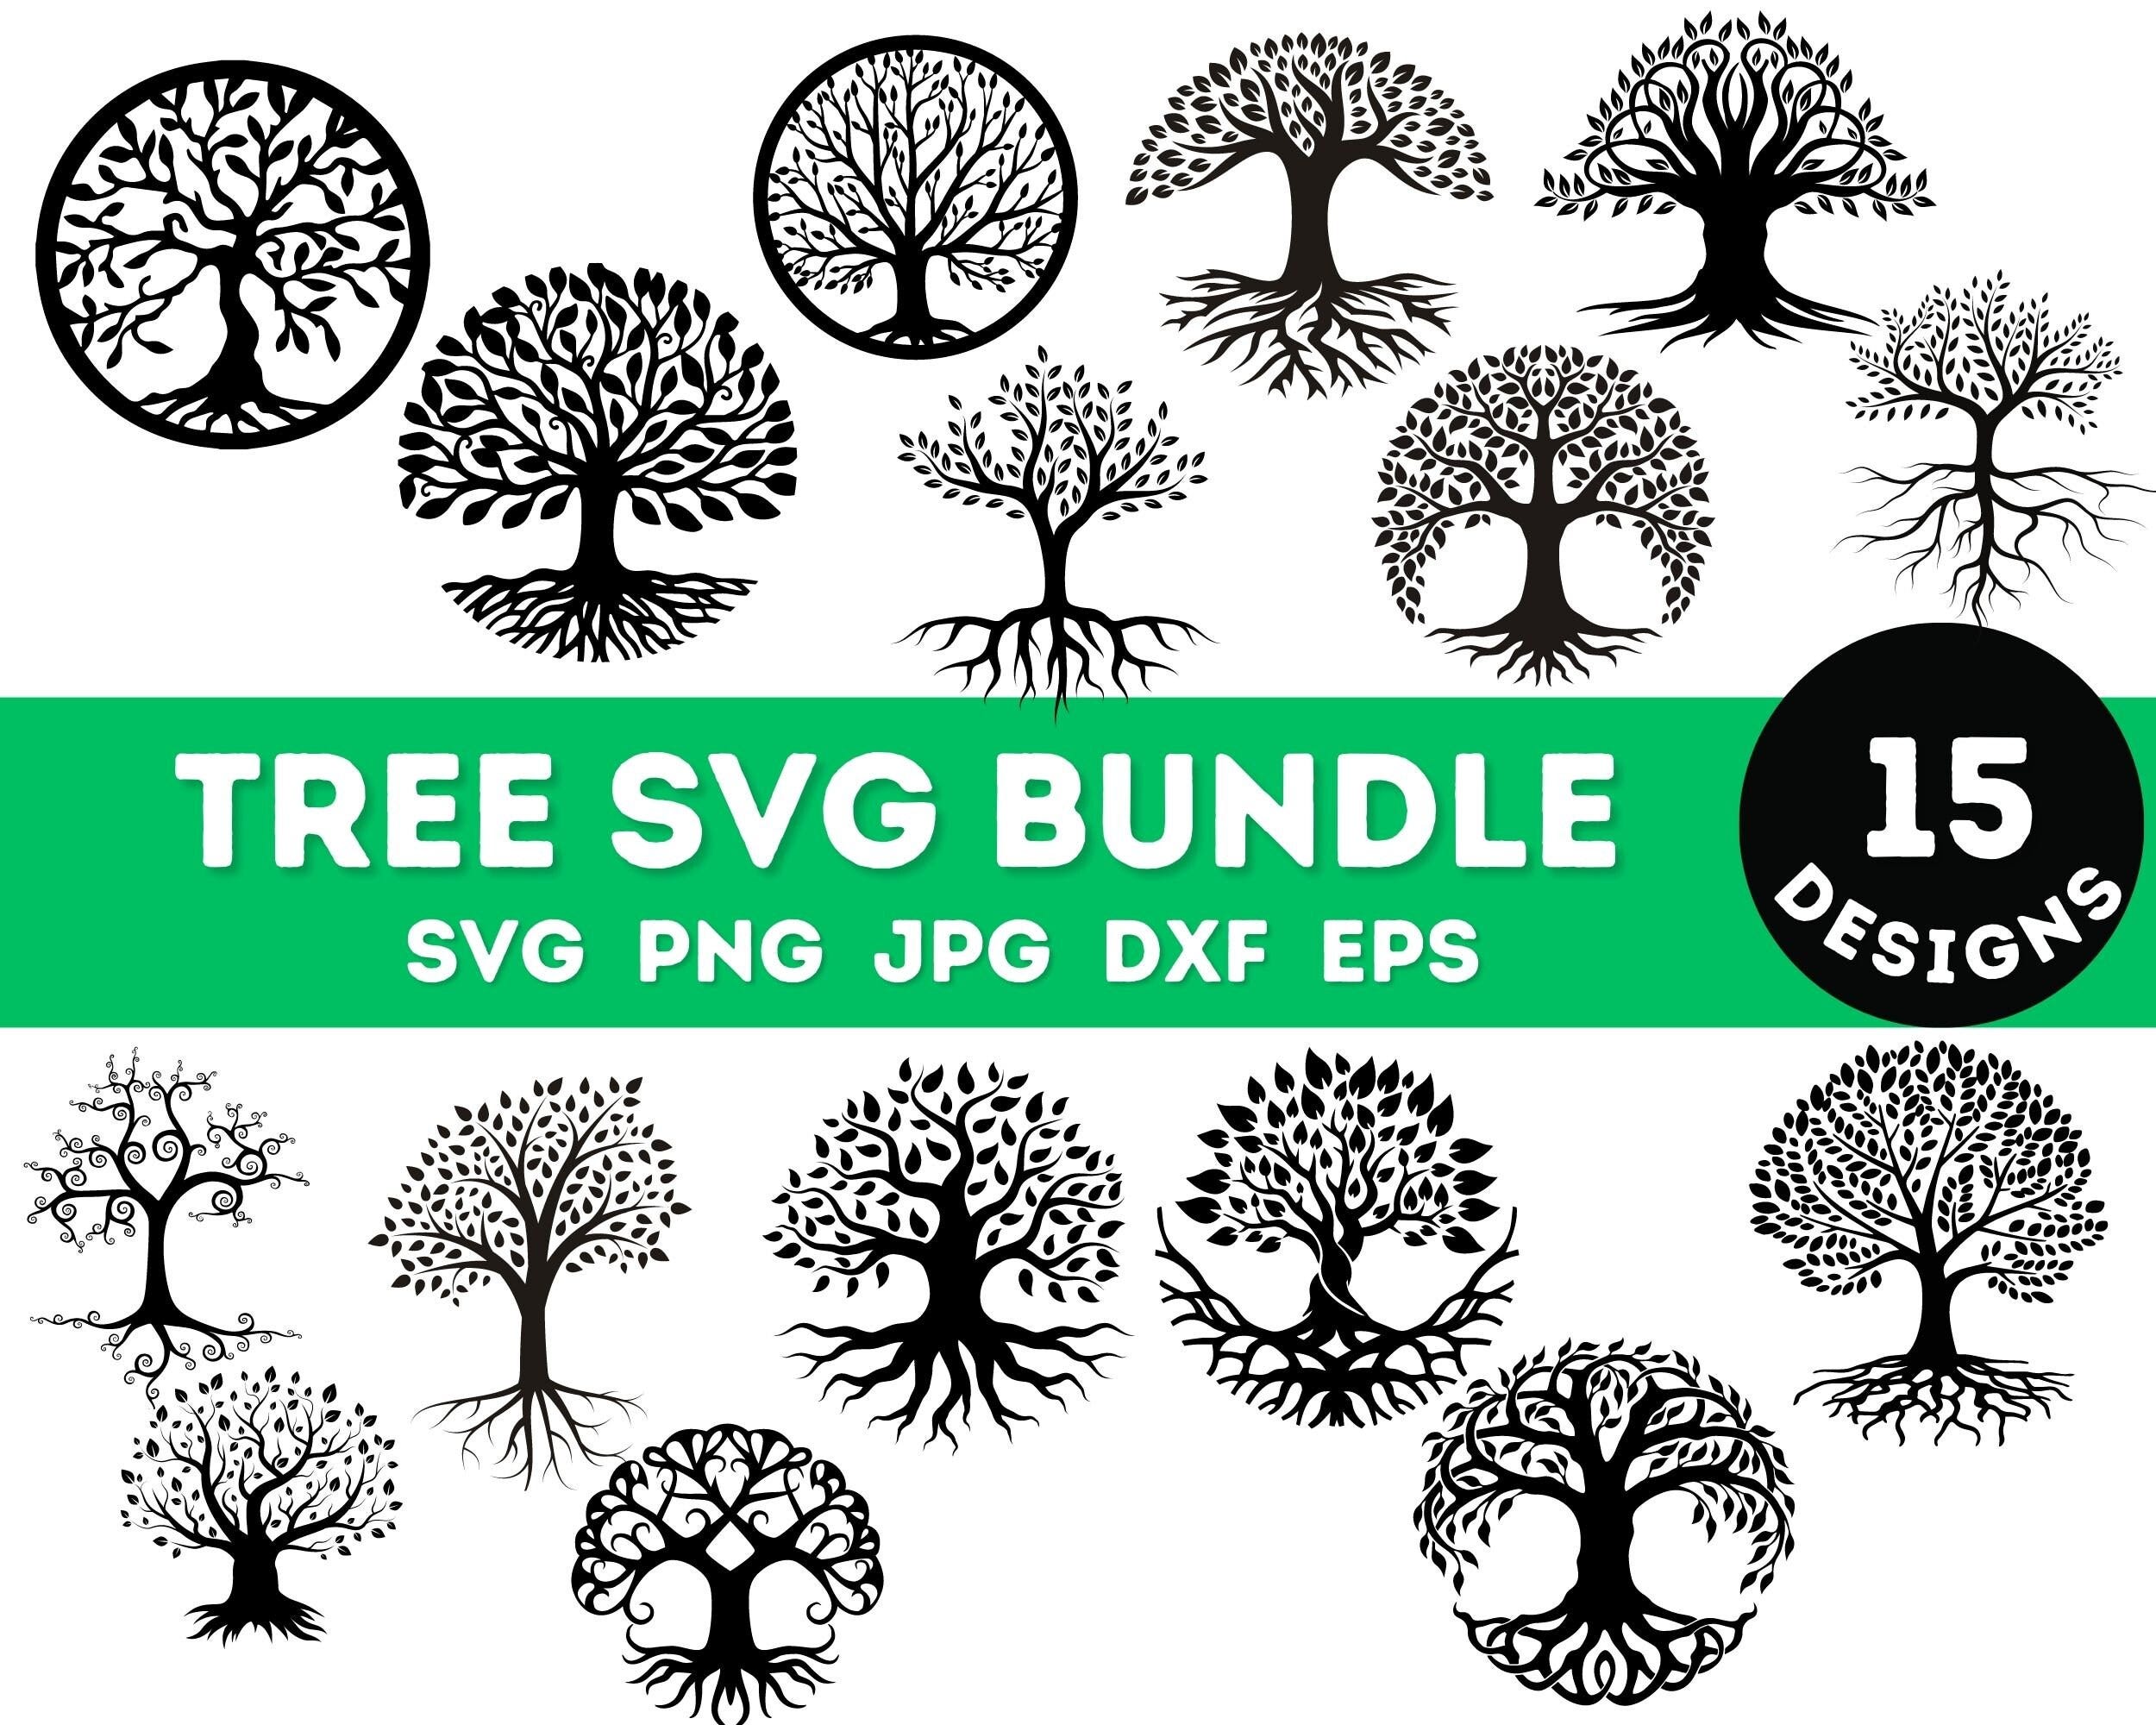 Tree Svg, Trees Svg, Tree Of Life Svg, Tree Clipart, Svg Files For Cricut, Tree Cut File, Tree Line Svg, Landscape Svg, Tree Svg Bundle,